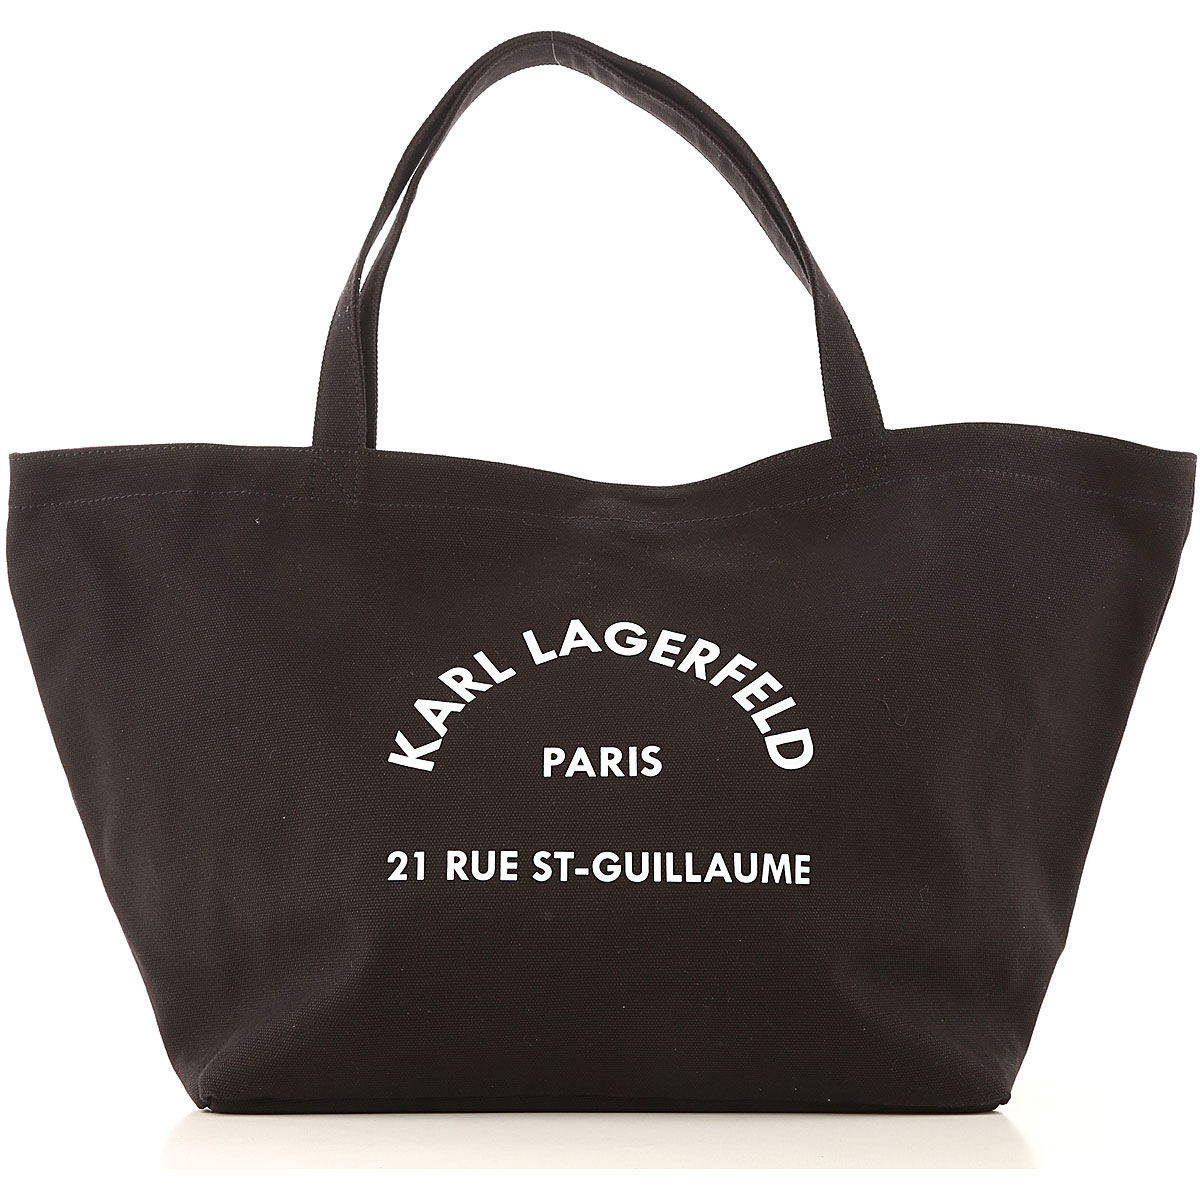 Handbags Karl Lagerfeld, Style code: 201w3138-nero-B455